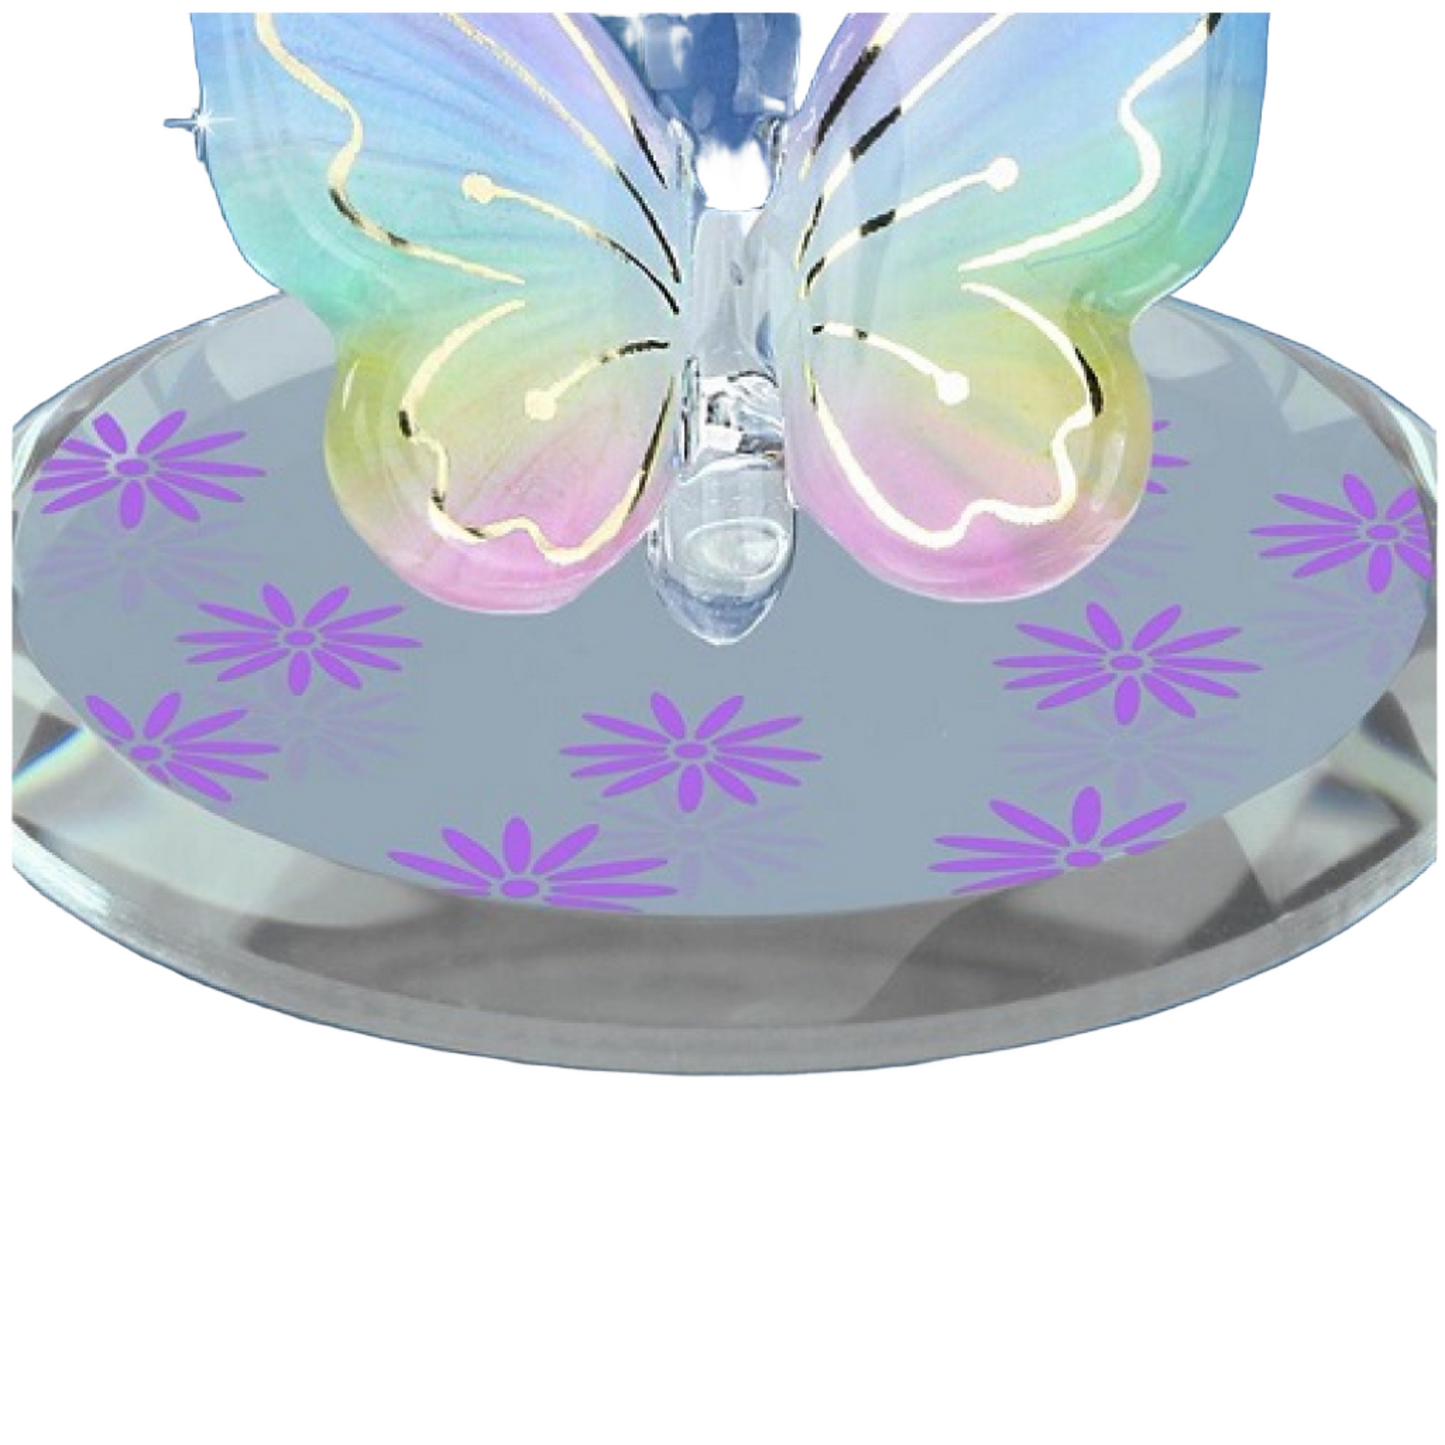 Glass Baron Butterfly Figurine - Lavender Rainbow